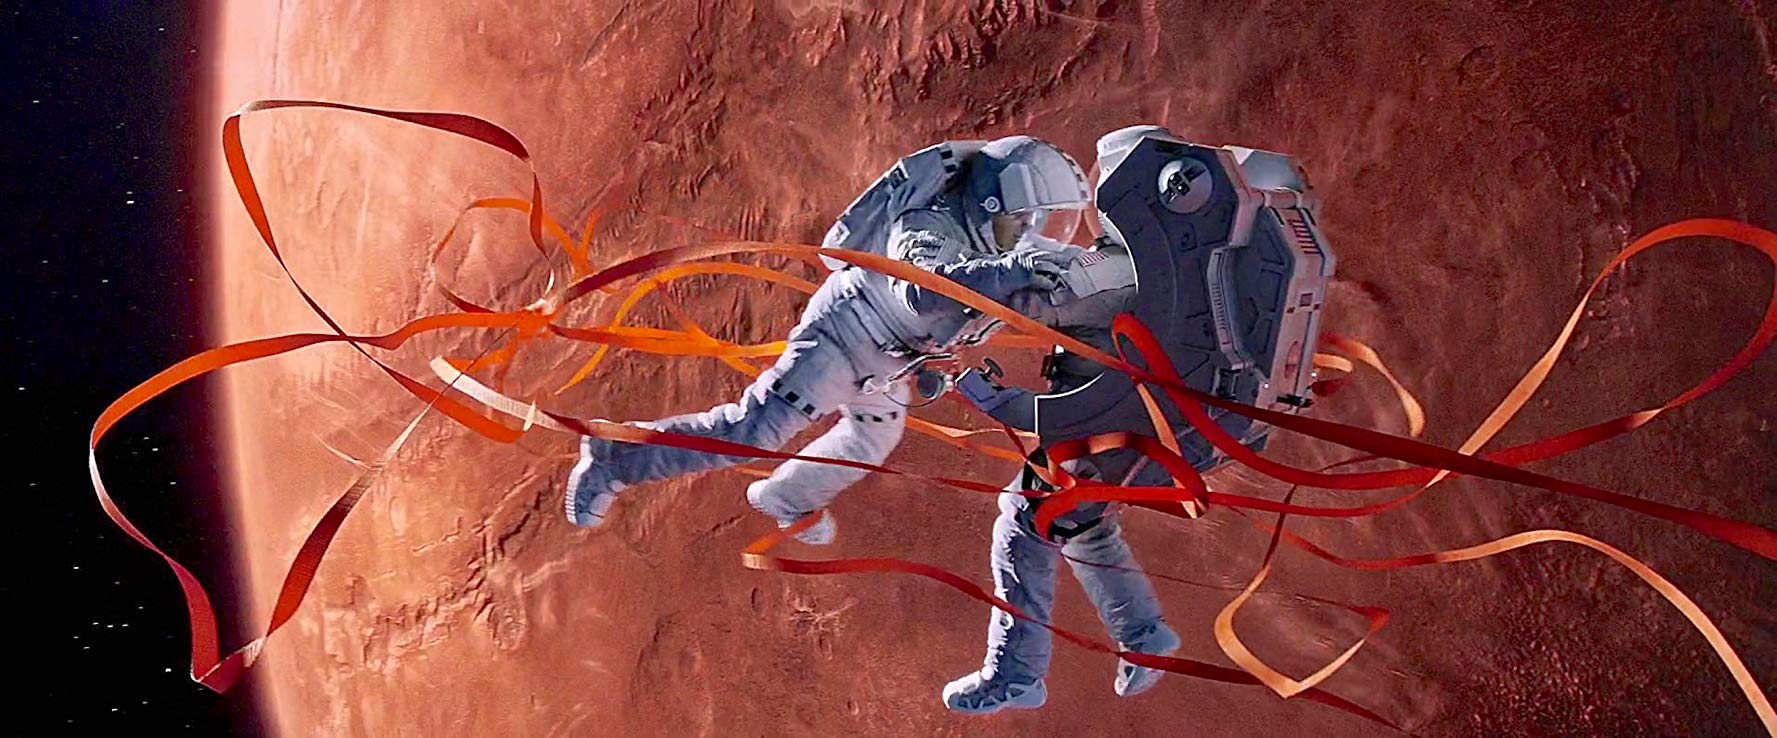 Matt Damon and Jessica Chastain in The Martian (2015)